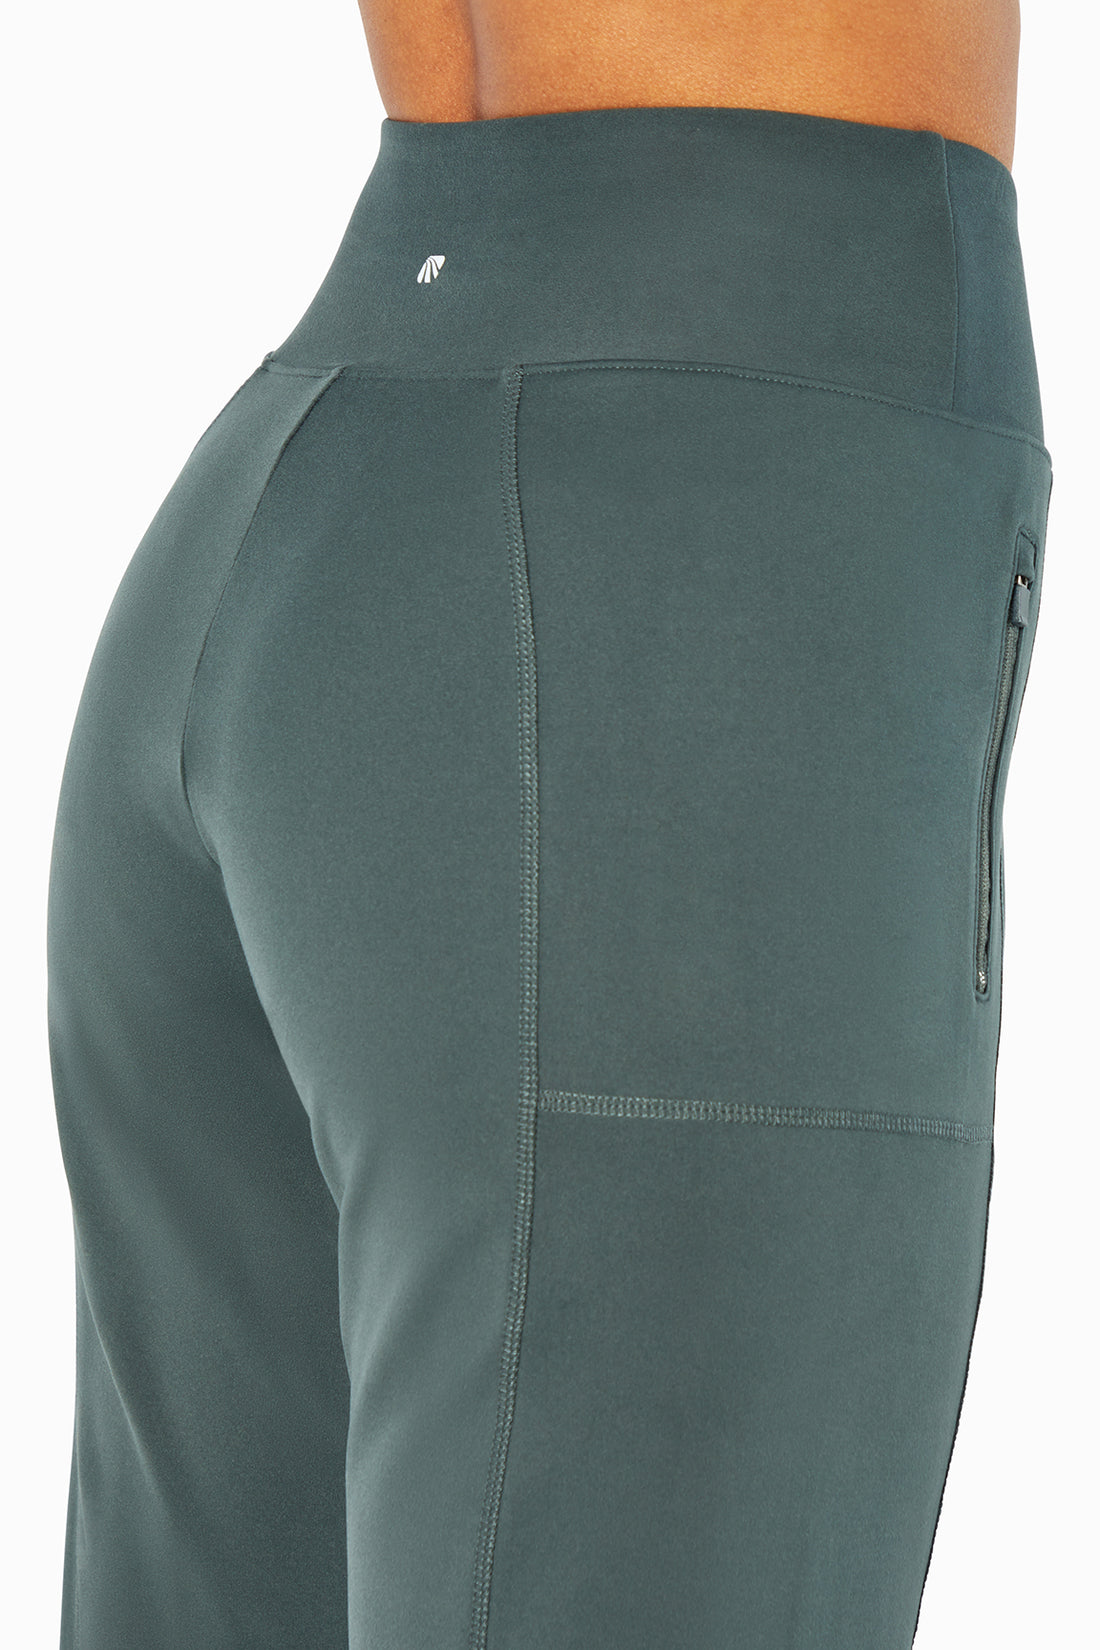 Marika Green Black Active Pants Size S - 68% off